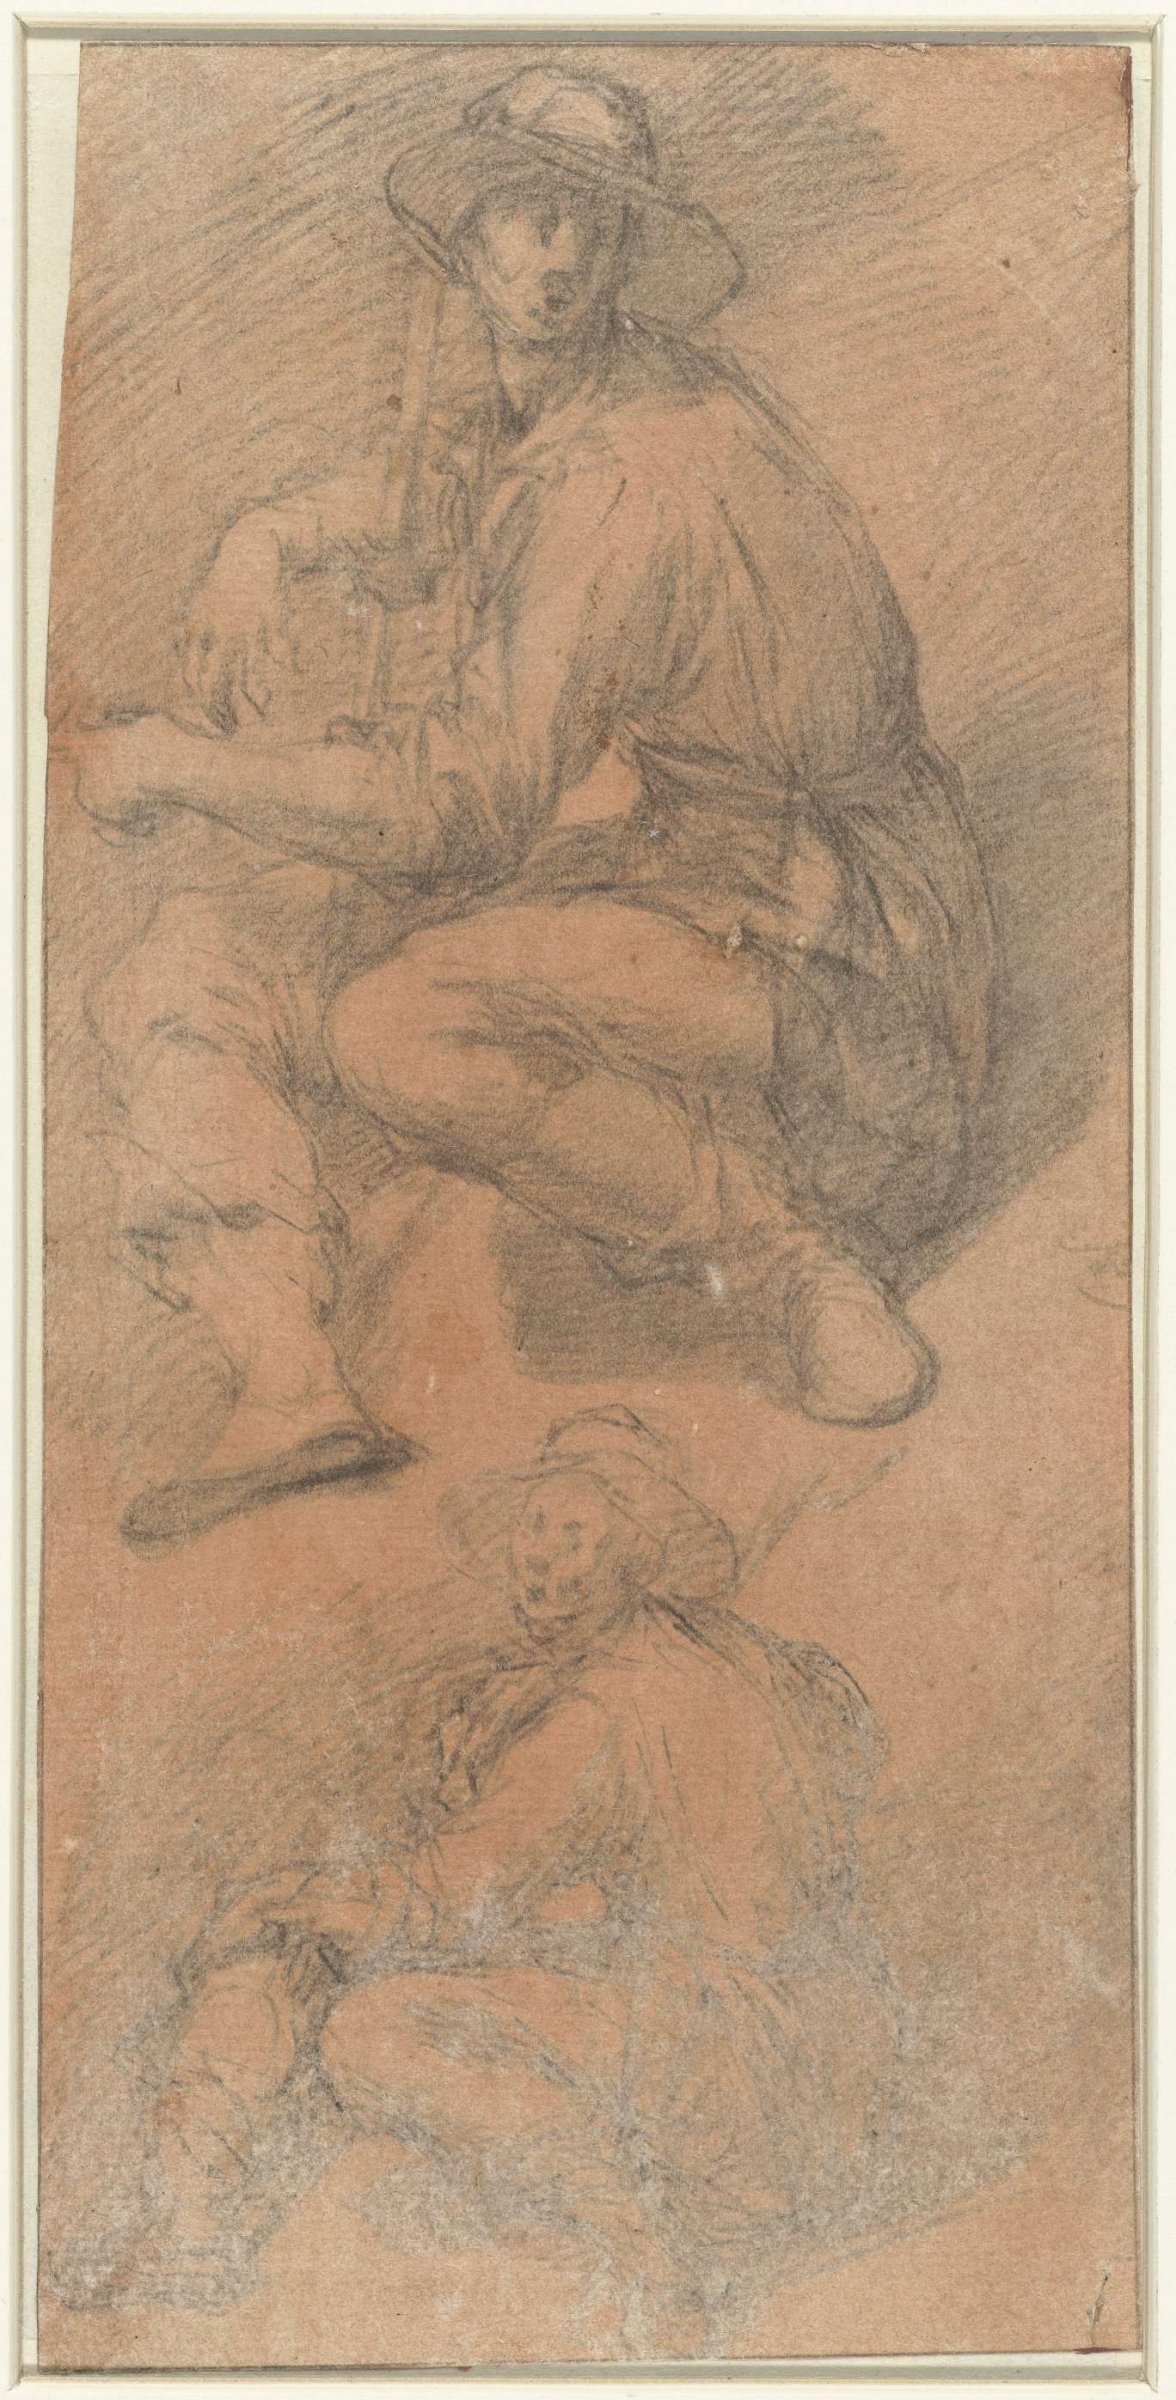 Two figure studies of a seated man, Bernardino Poccetti, 1558 - 1612